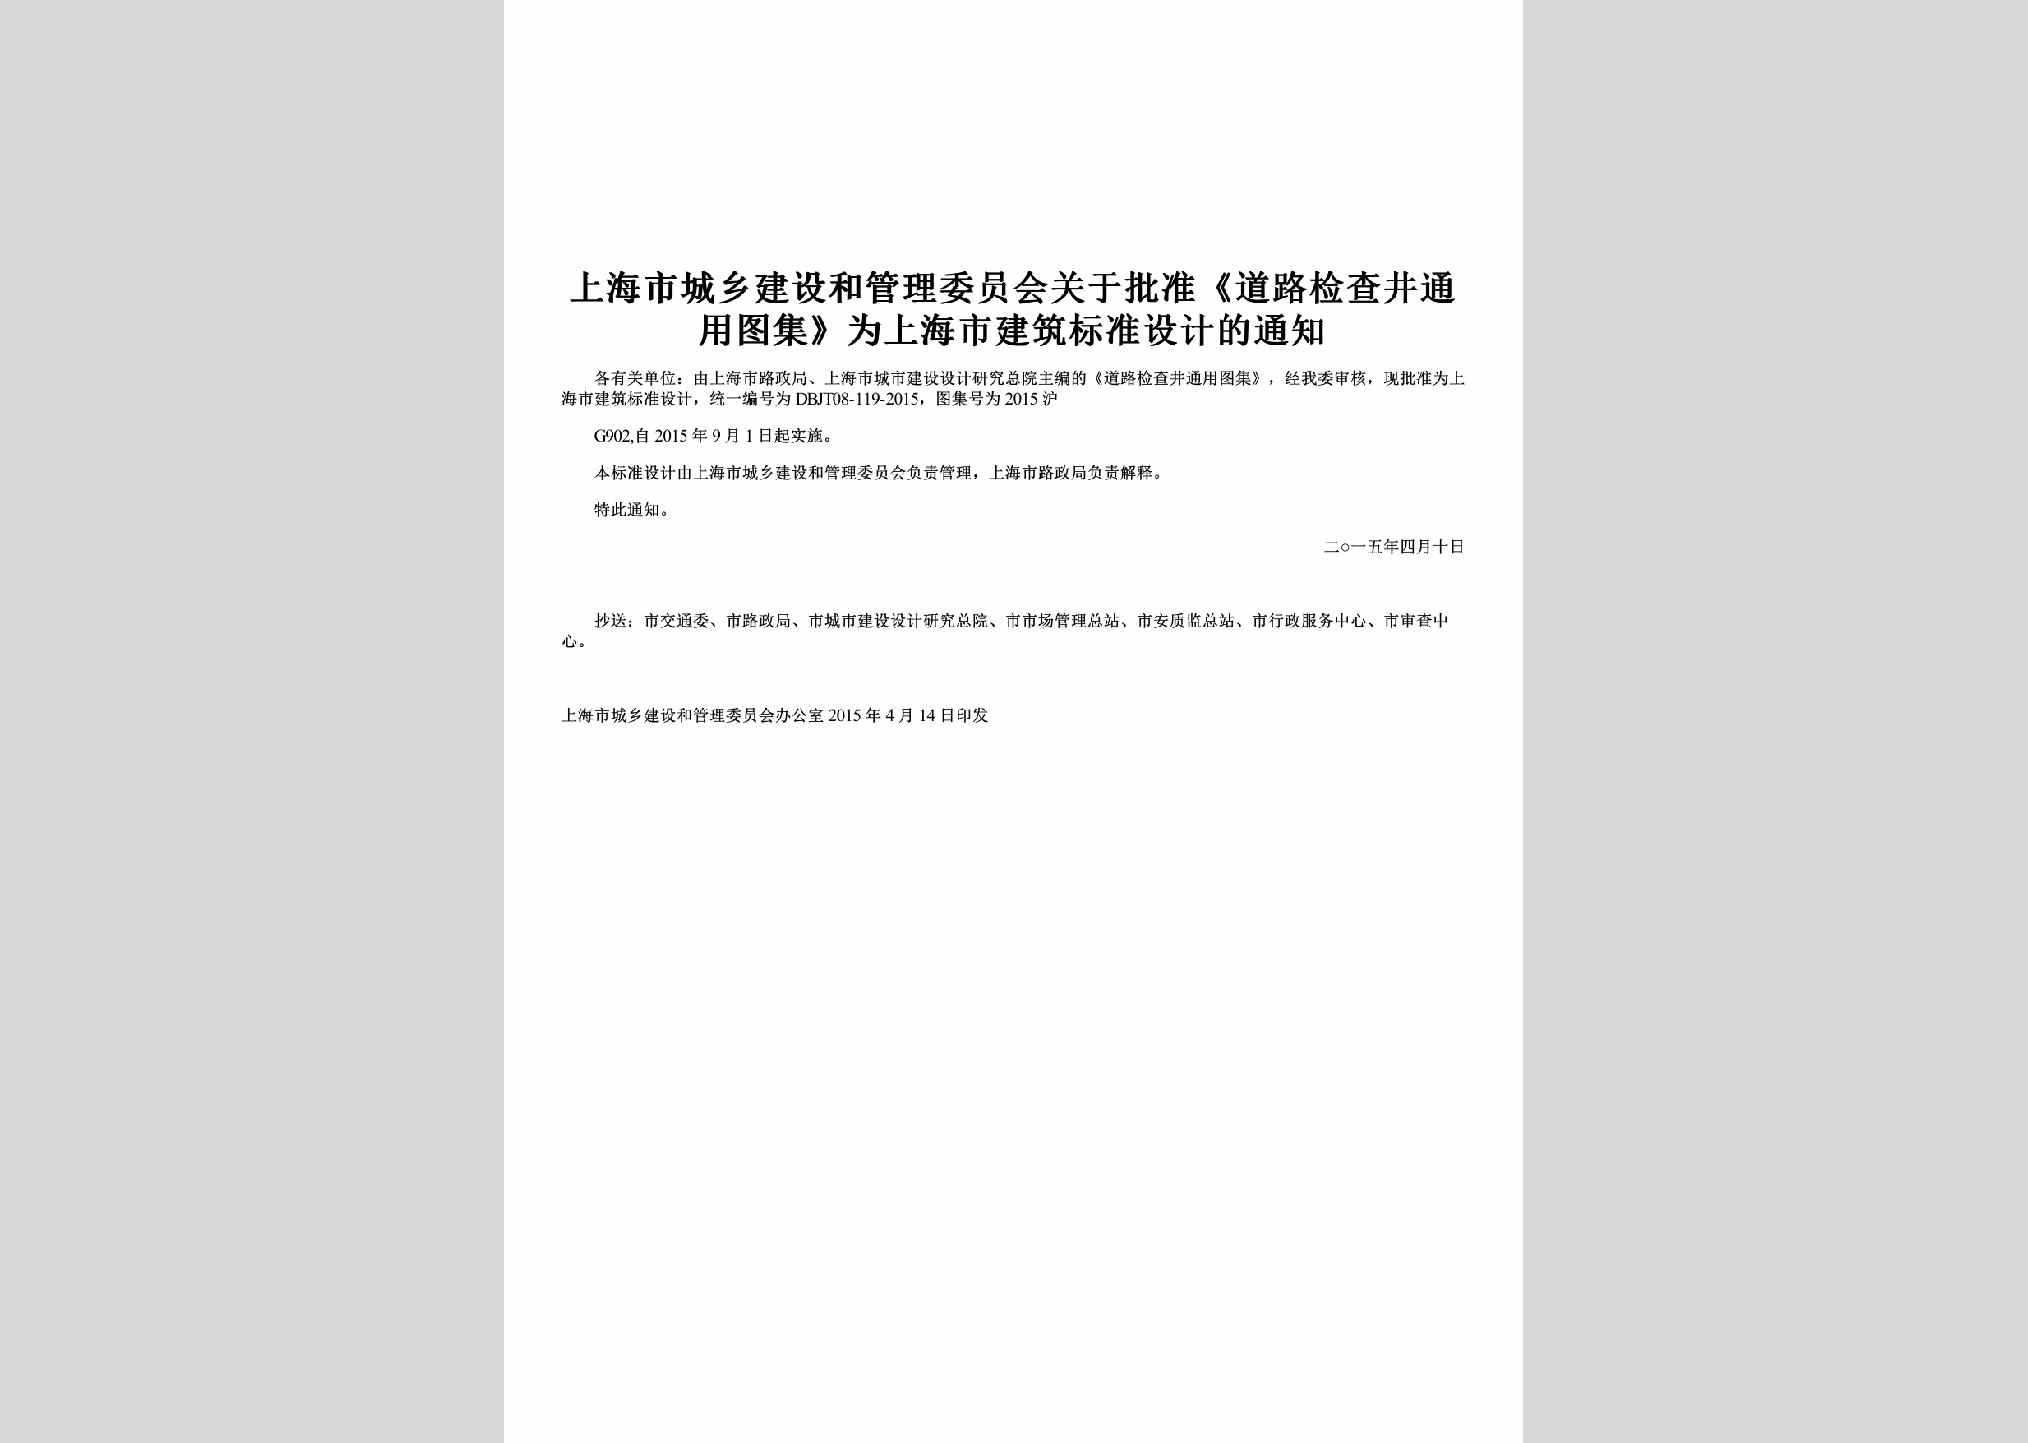 SH-DLJCBZTZ-2015：关于批准《道路检查井通用图集》为上海市建筑标准设计的通知